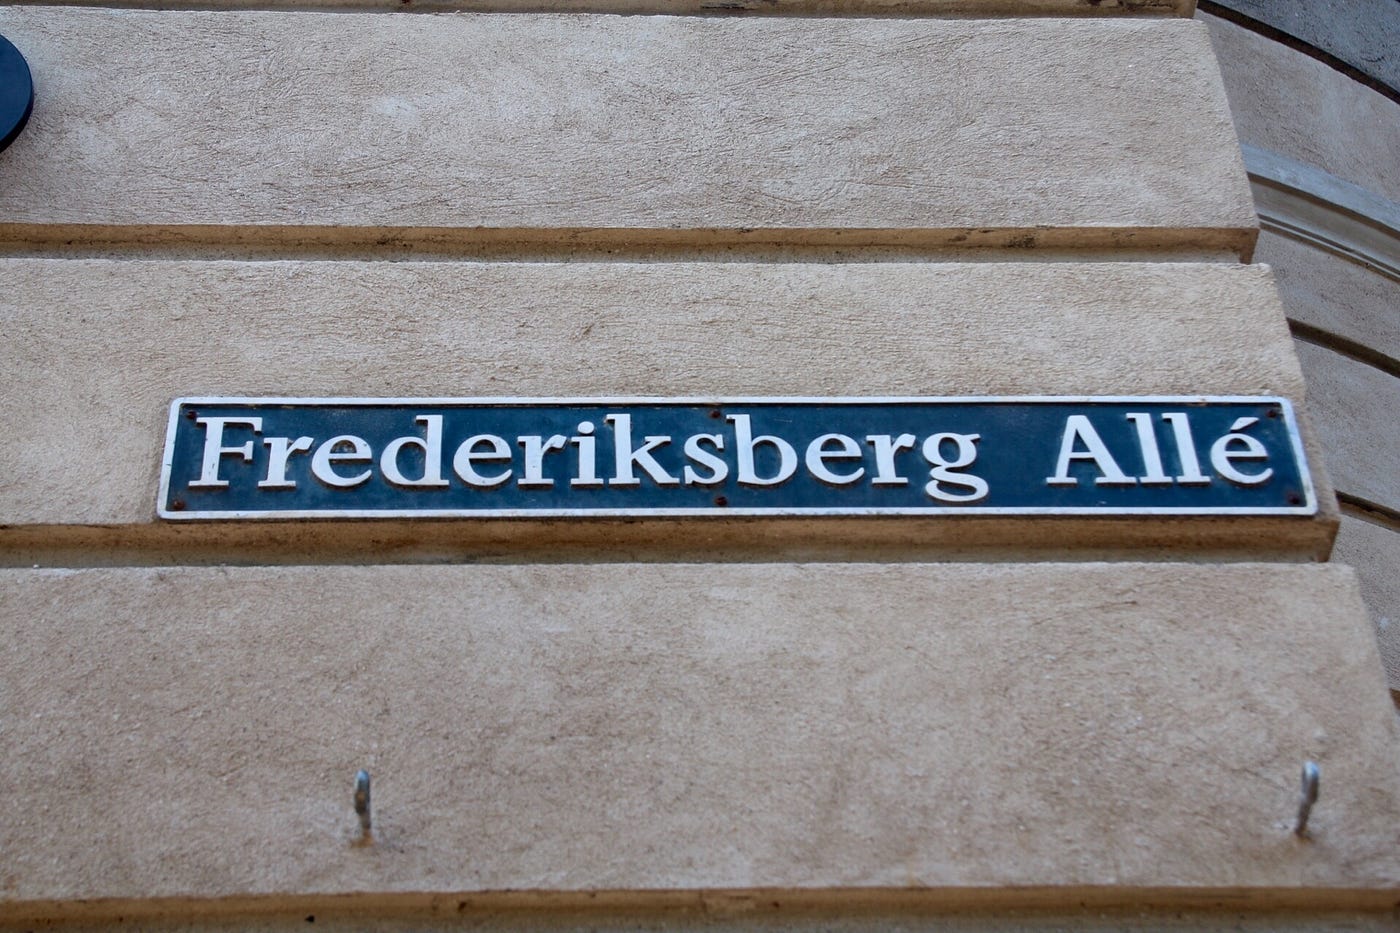 Frederiksberg Alle. Photo Essay | by Augusta Khalil Ibrahim | Medium